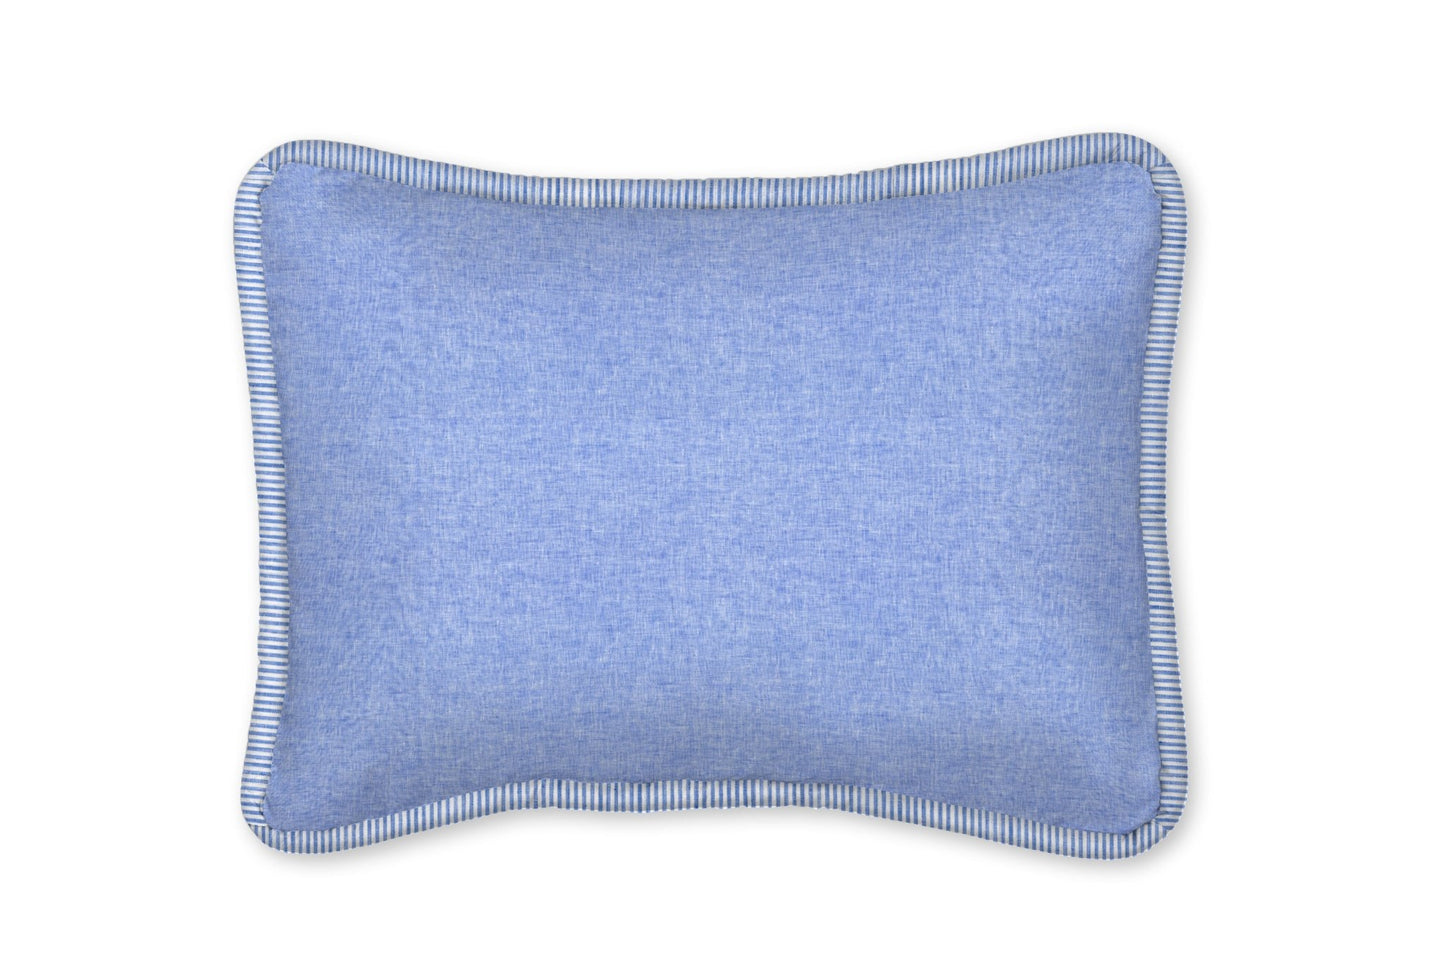 Cabo Blue Linen Decorative Pillow - New Arrivals Inc